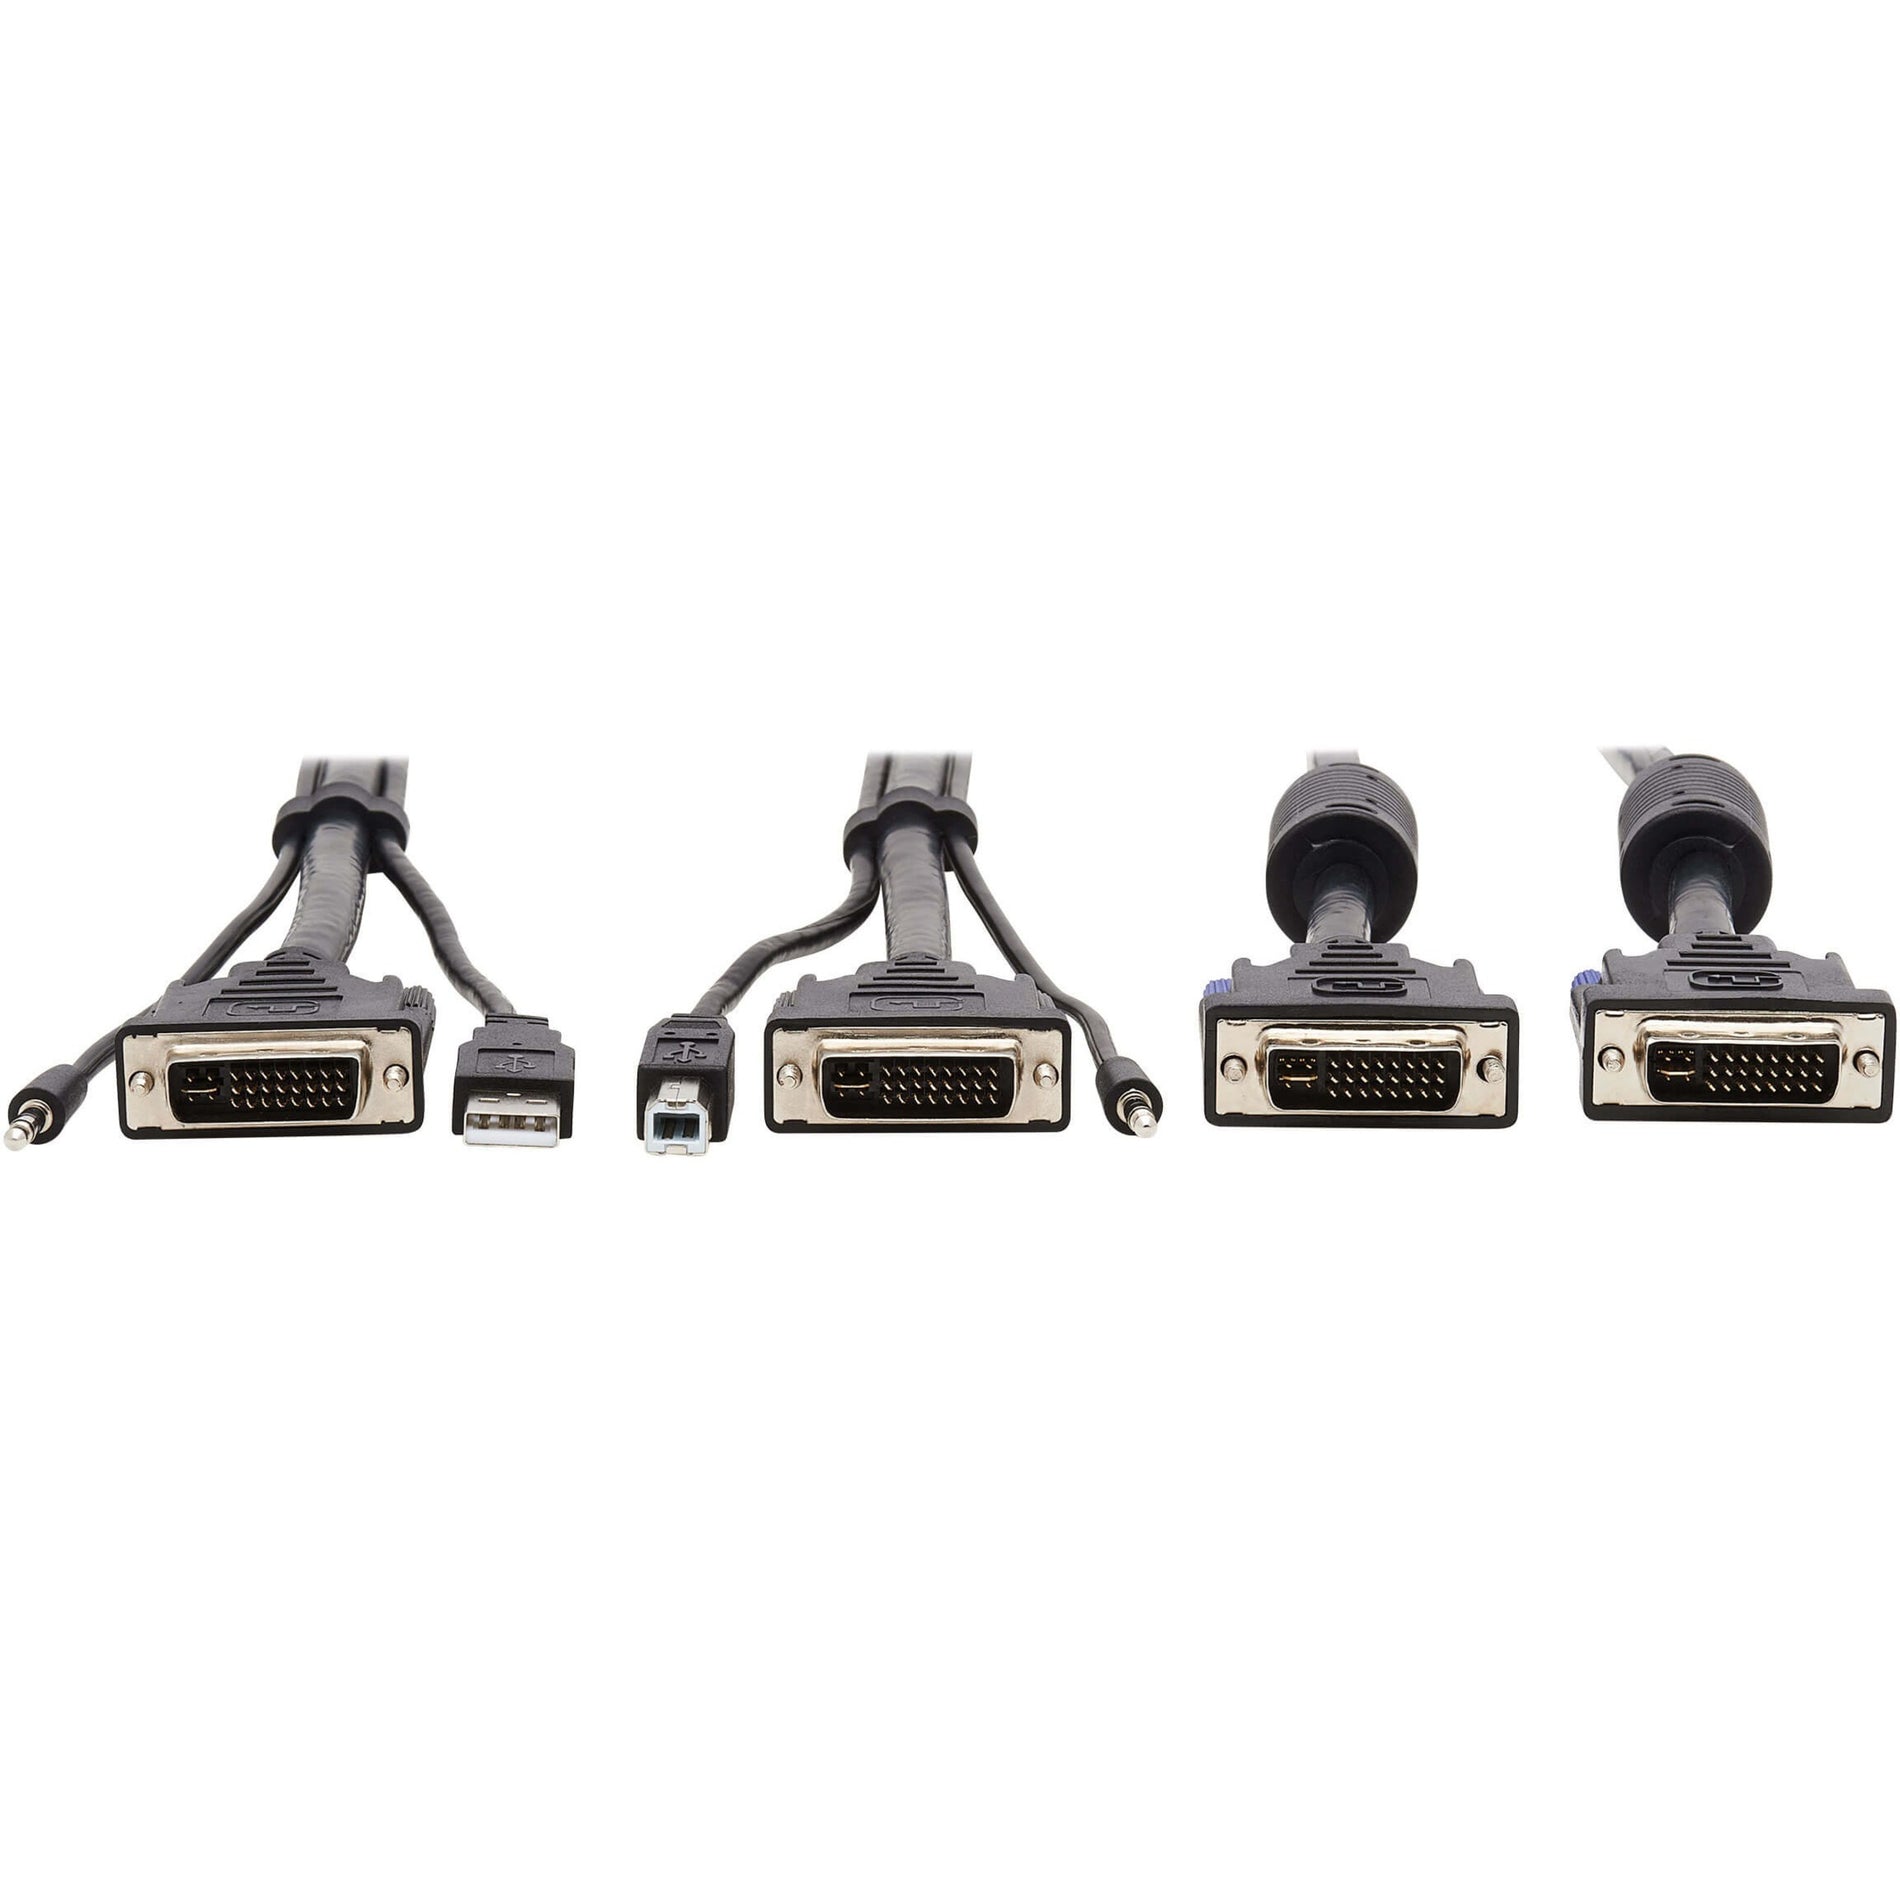 Tripp Lite P784-010-DV 10FT 3-in-1 DVI USB 3.5mm Audio KVM Cable, Plug & Play